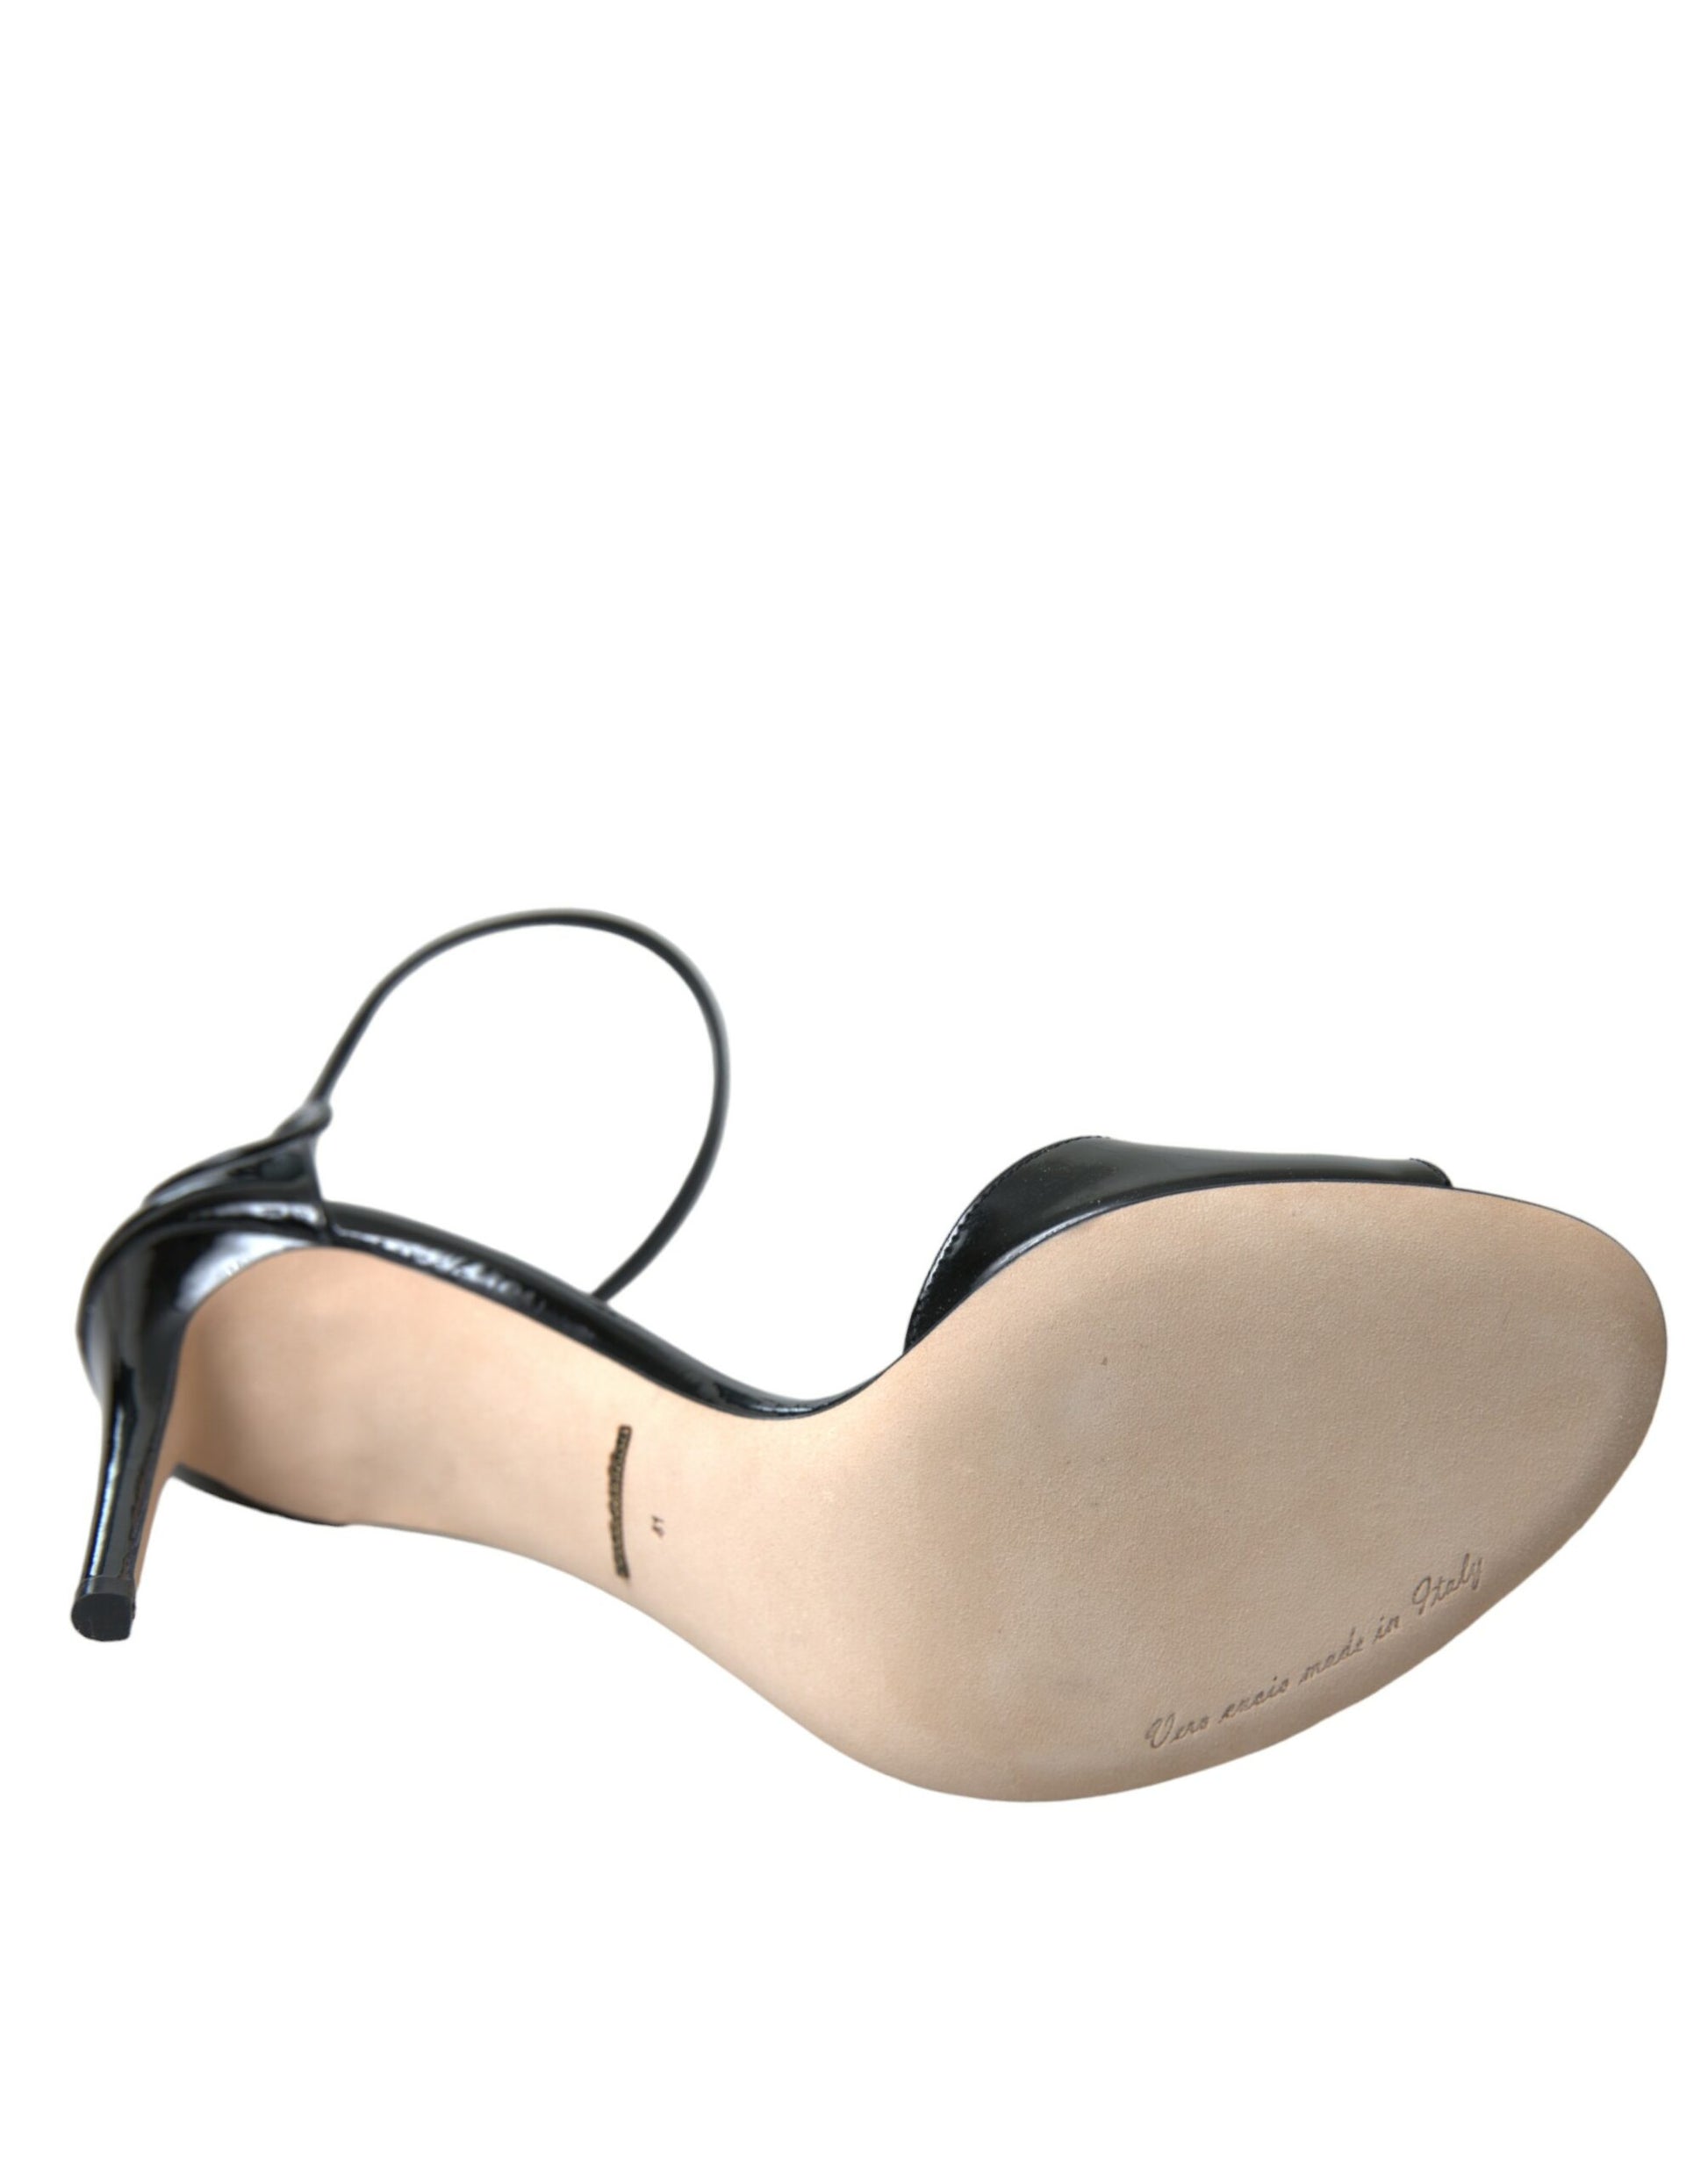 Black KEIRA Leather Heels Sandals Shoes